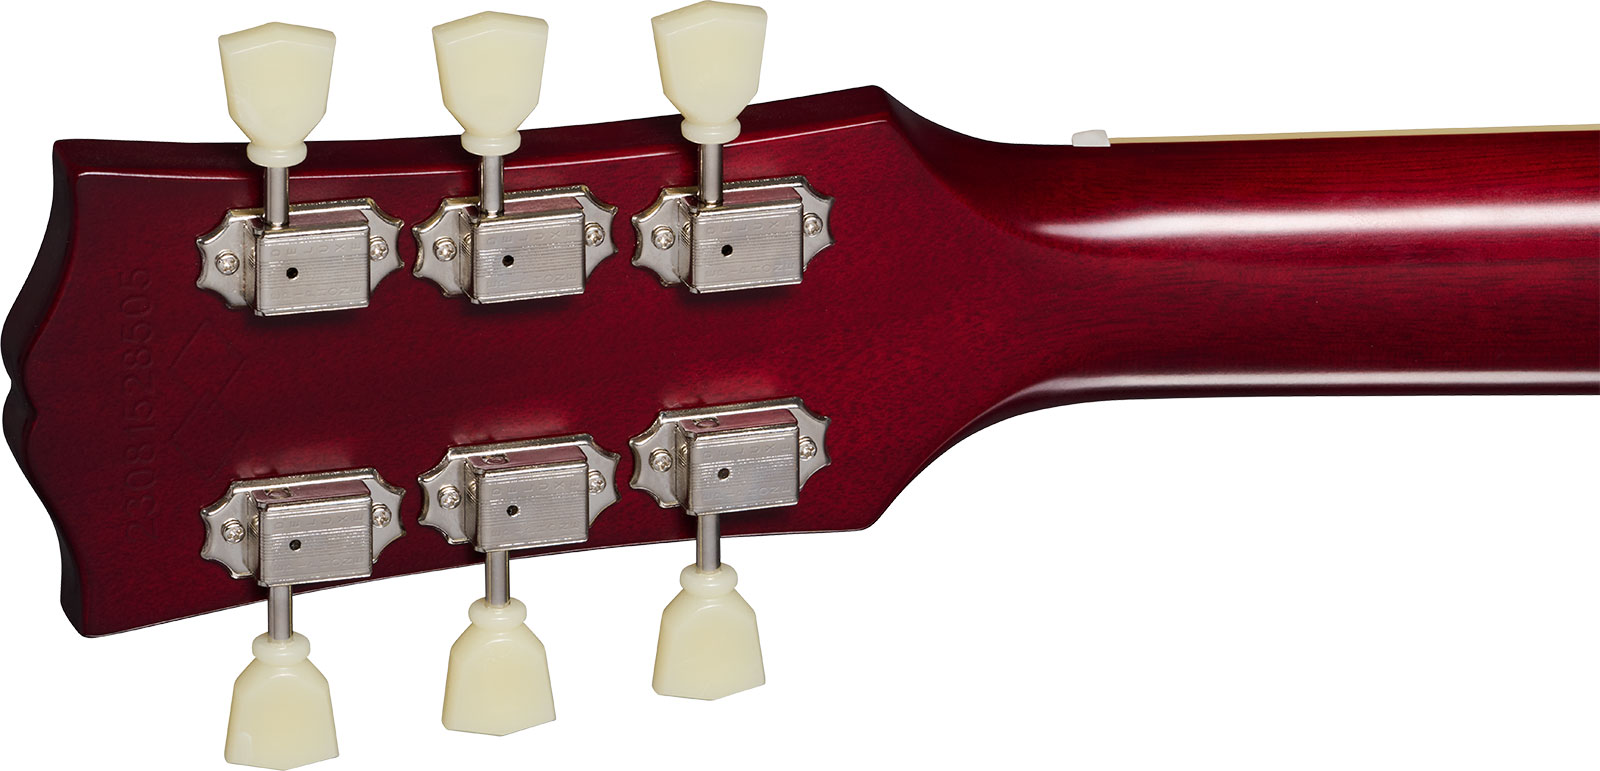 Epiphone 1959 Les Paul Standard Inspired By 2h Gibson Ht Lau - Vos Iced Tea Burst - Guitare Électrique Single Cut - Variation 4